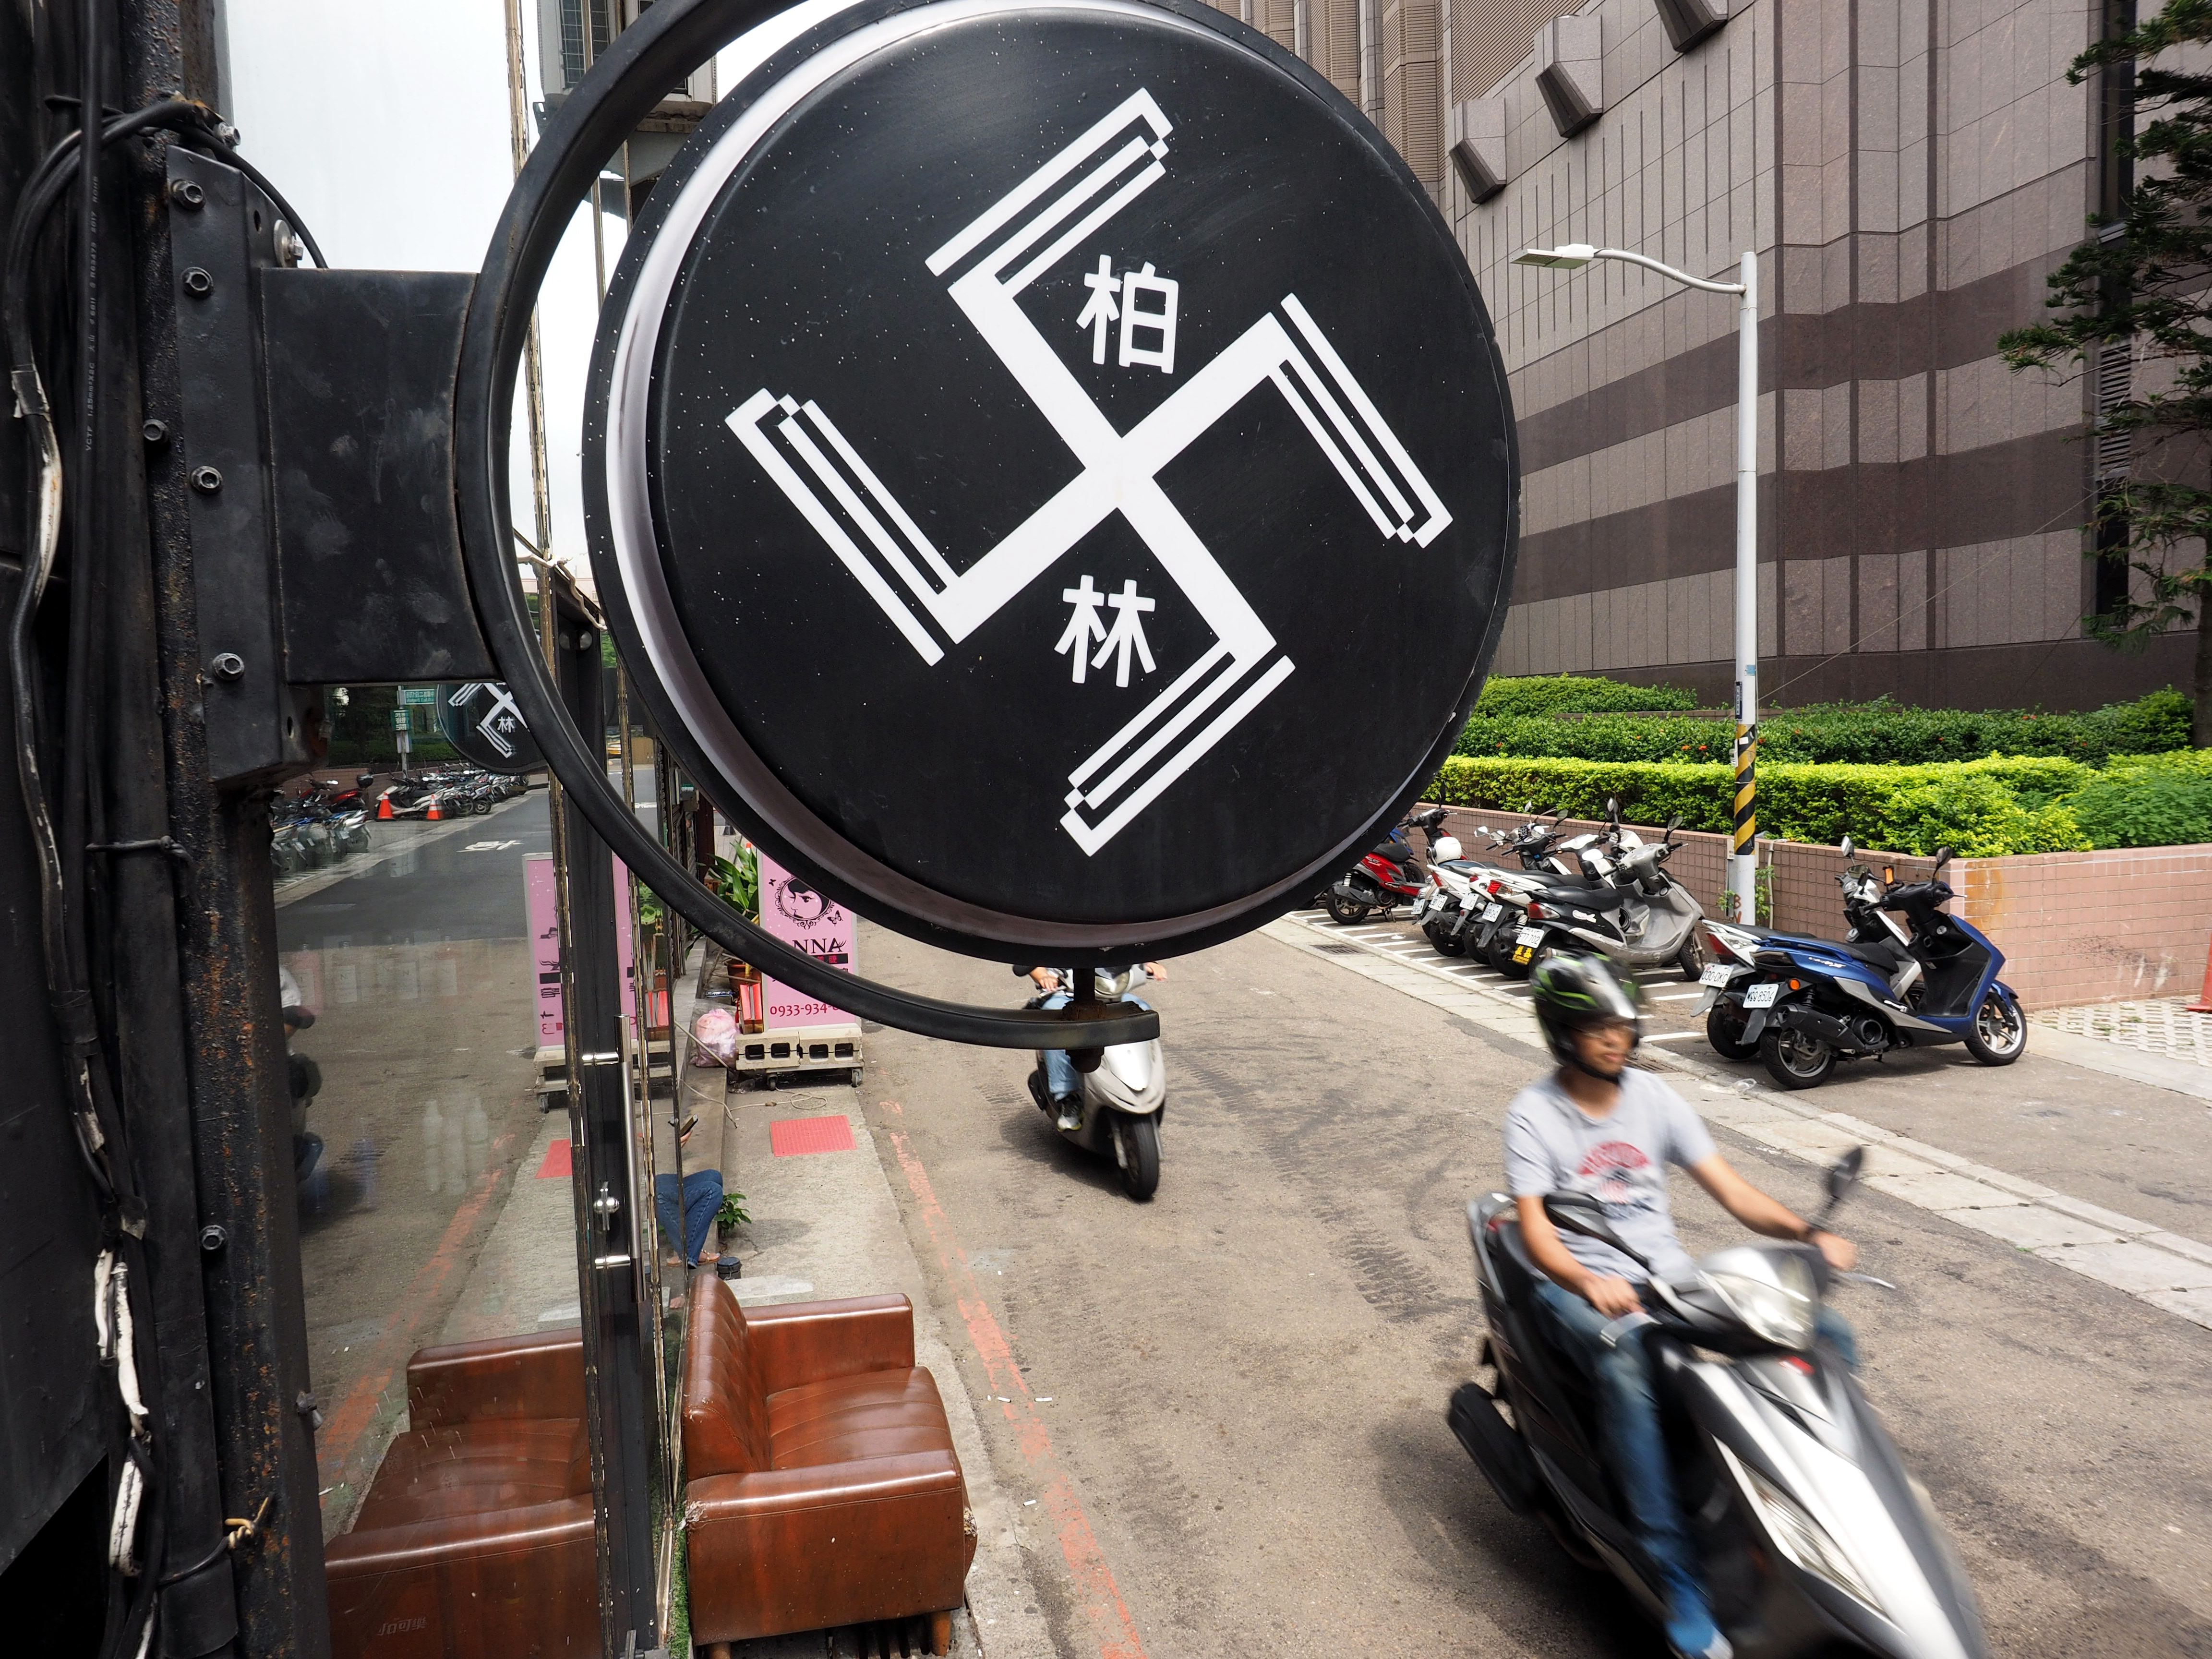 Taiwan hair salon's 'Nazi swastika' logo causes controversy